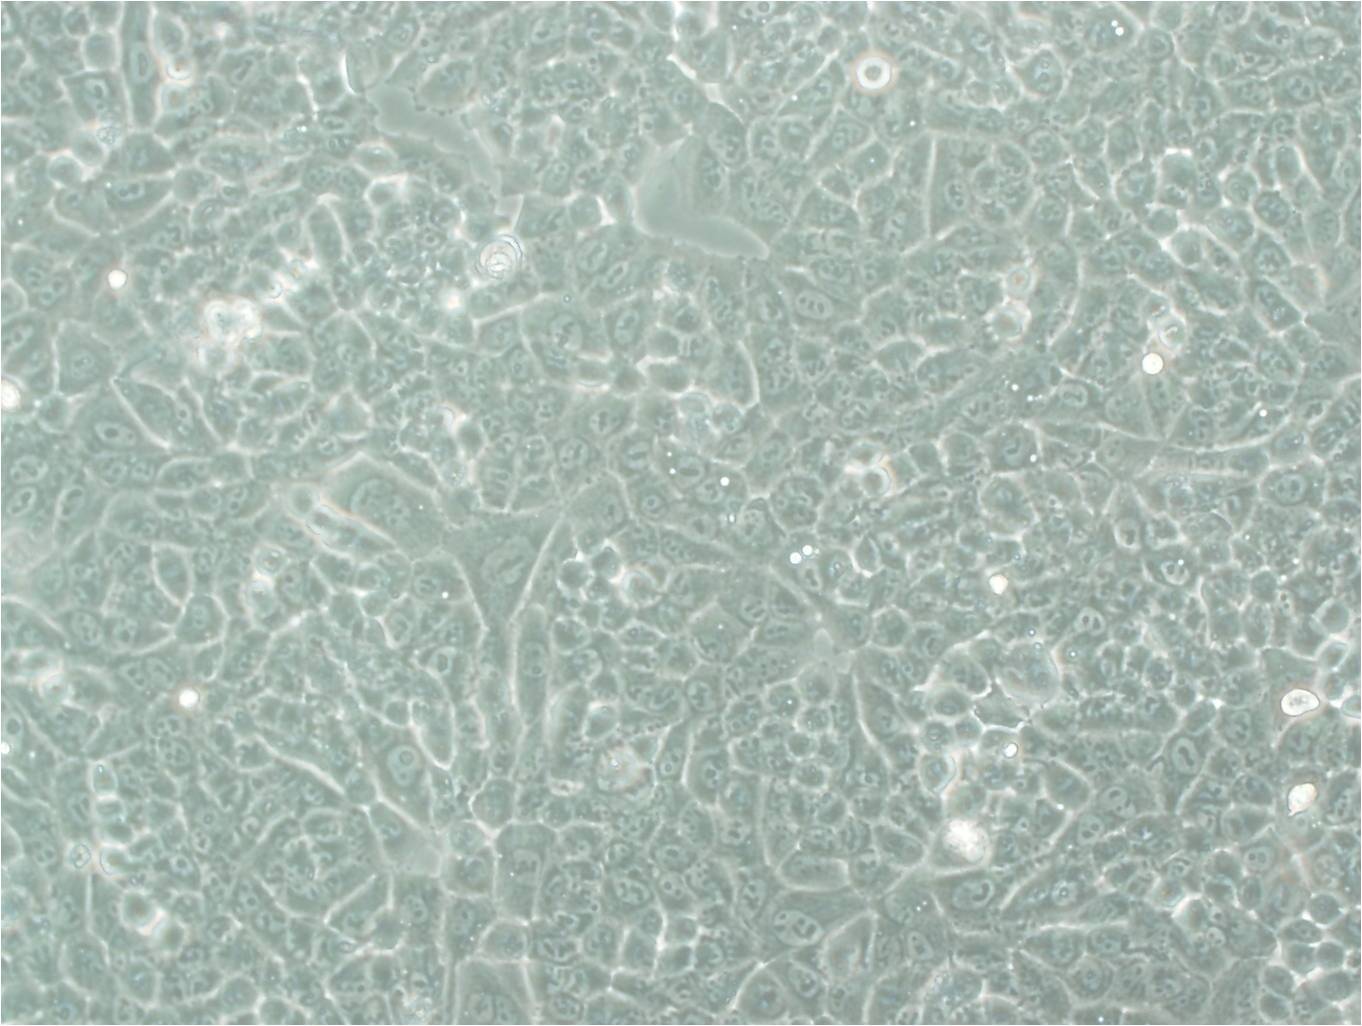 NL20 epithelioid cells人支气管上皮细胞系,NL20 epithelioid cells